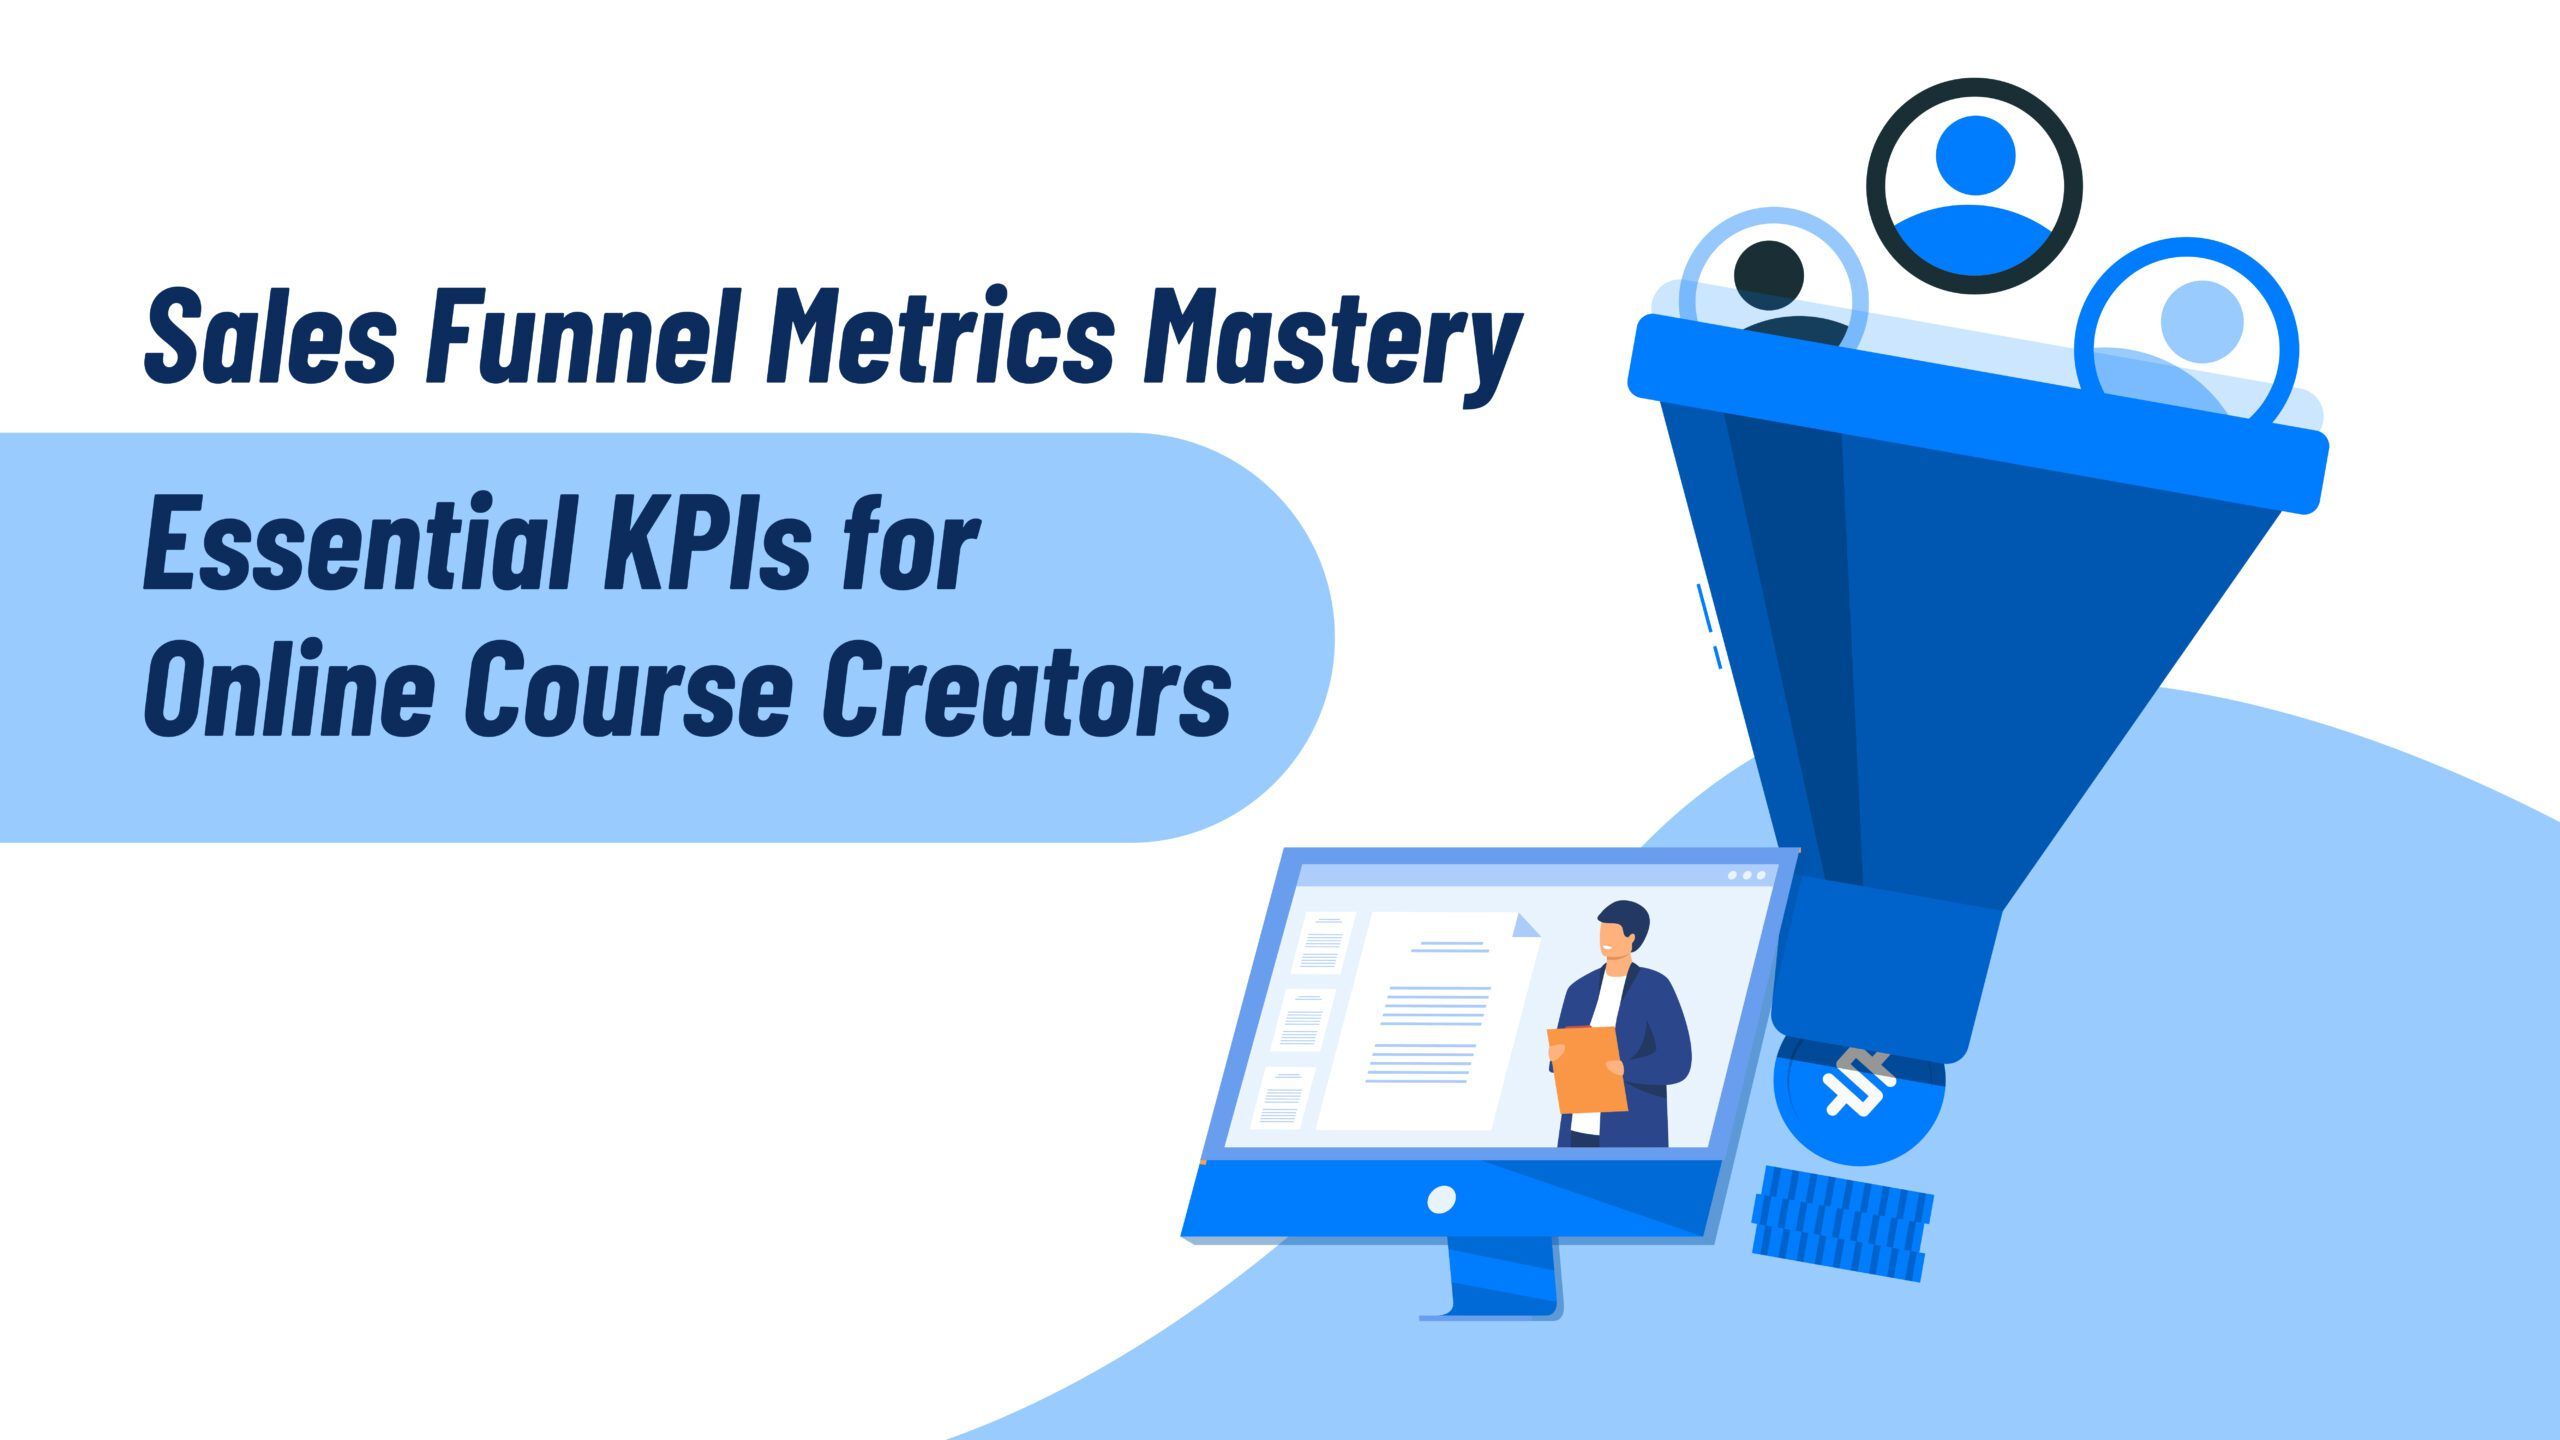 Sales Funnel Metrics Mastery Essential KPIs for Online Course Creators